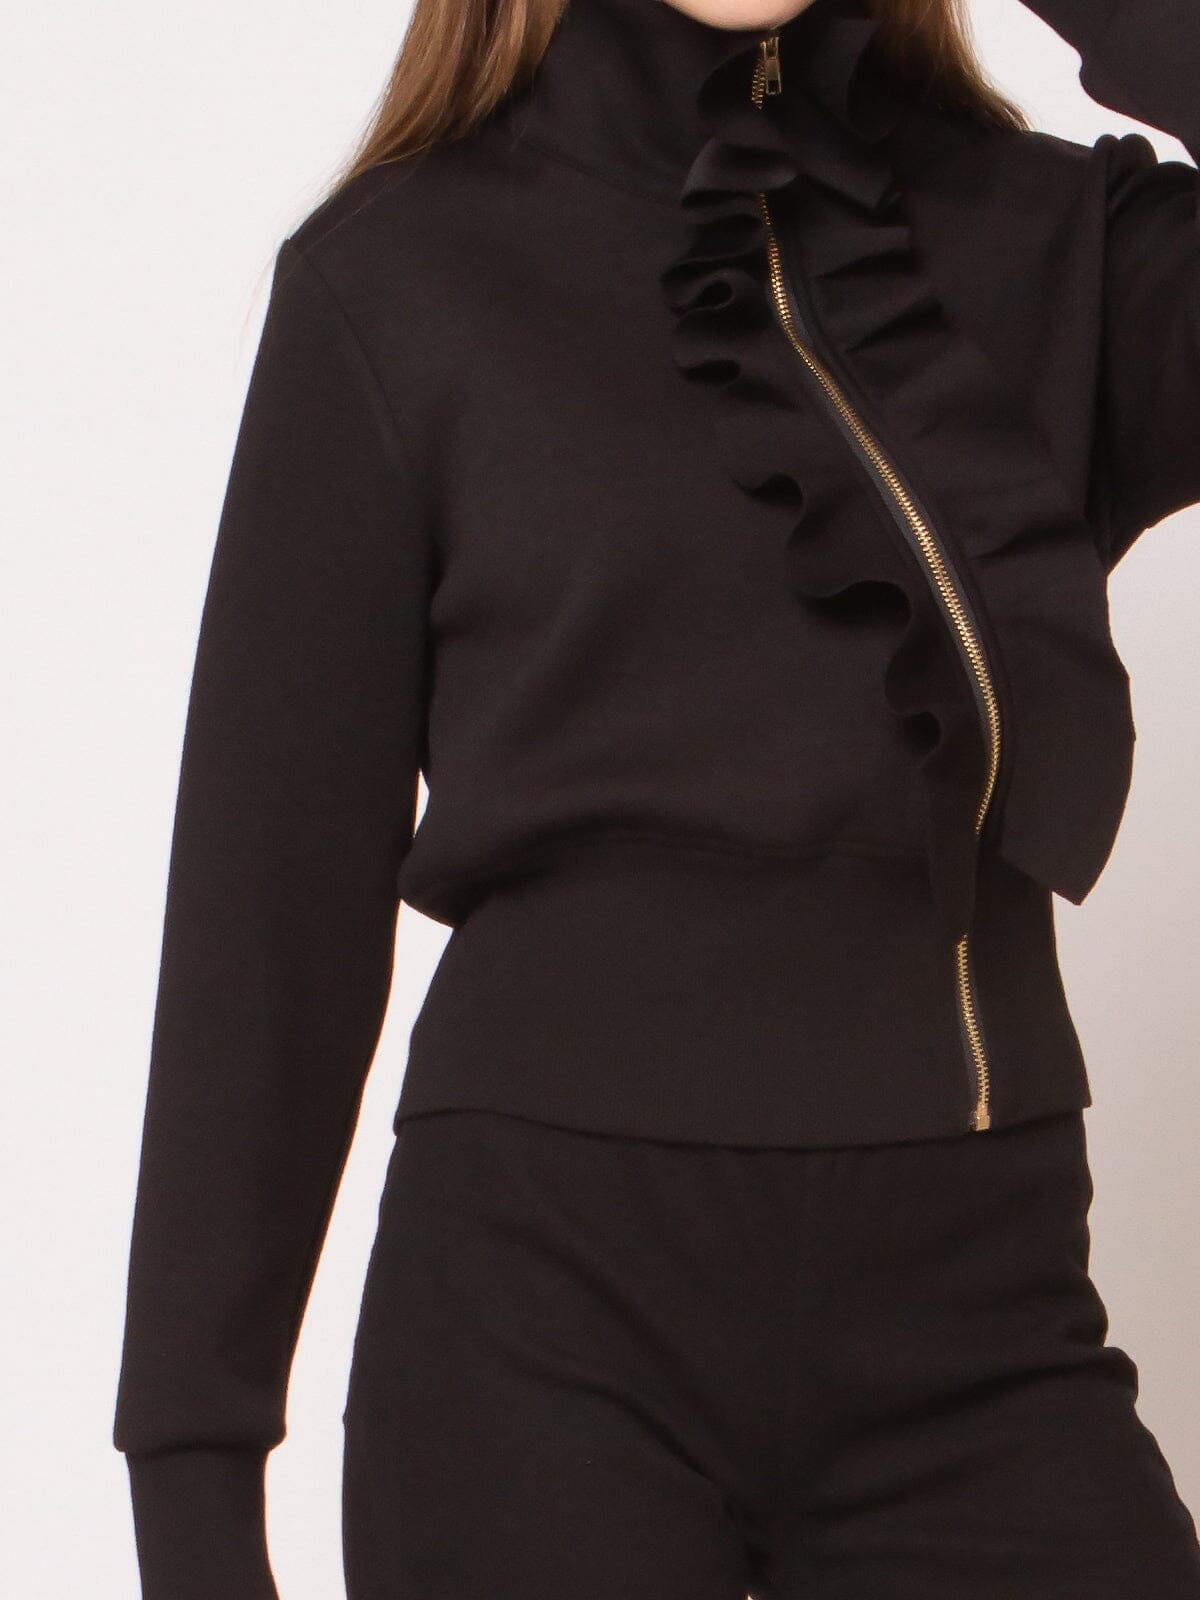 Highneck Scuba Assymetrical Ruffled Zip Jacket JACKET Gracia Fashion BLACK S 